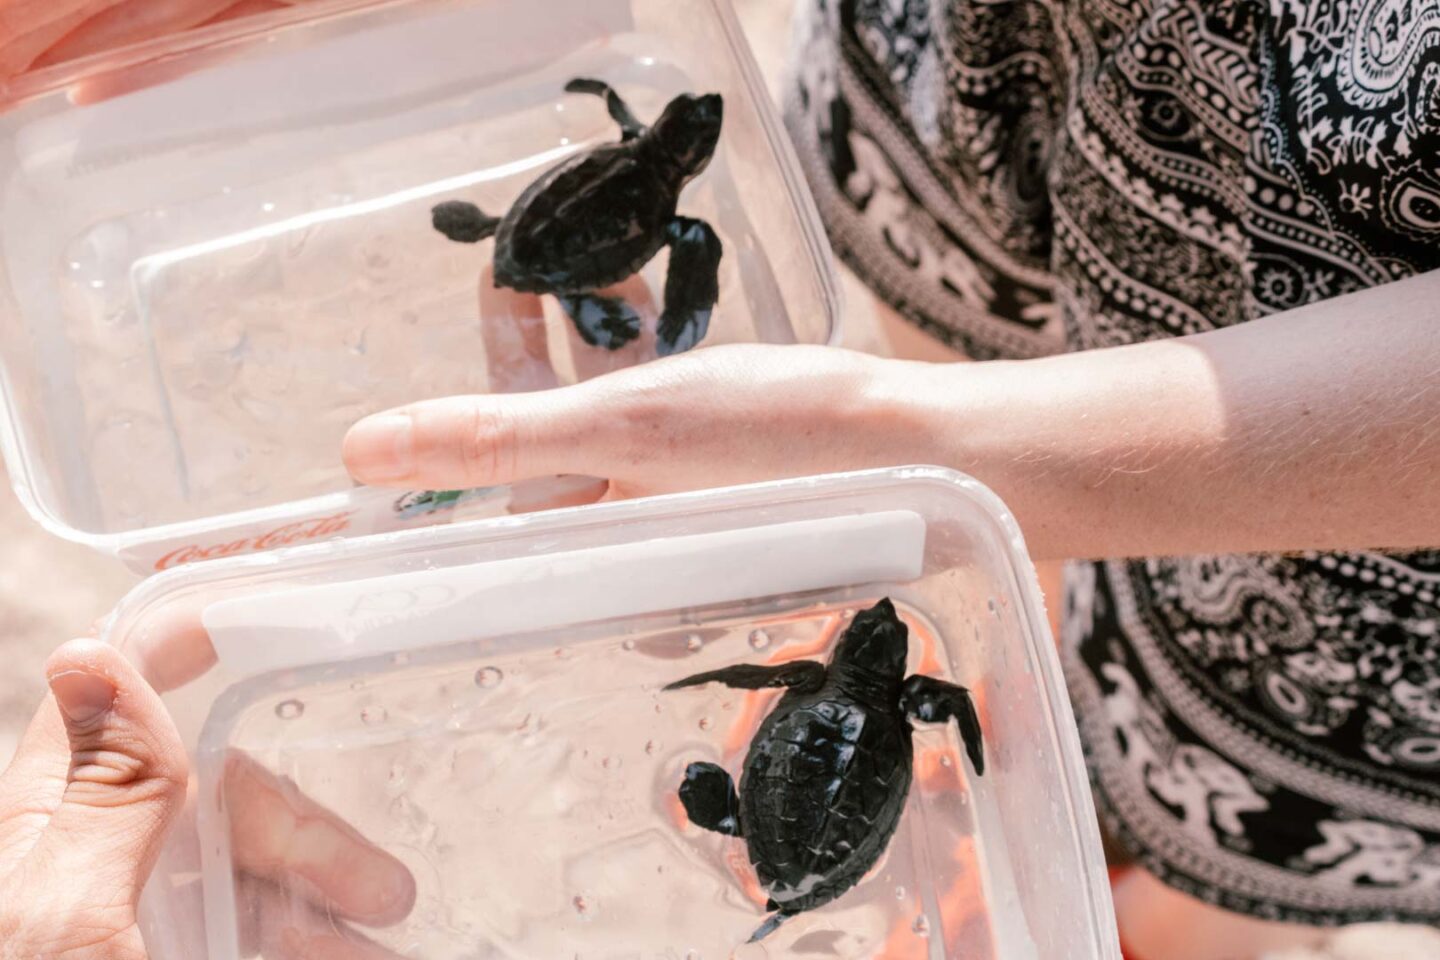 releasing sea turtles in Indonesia